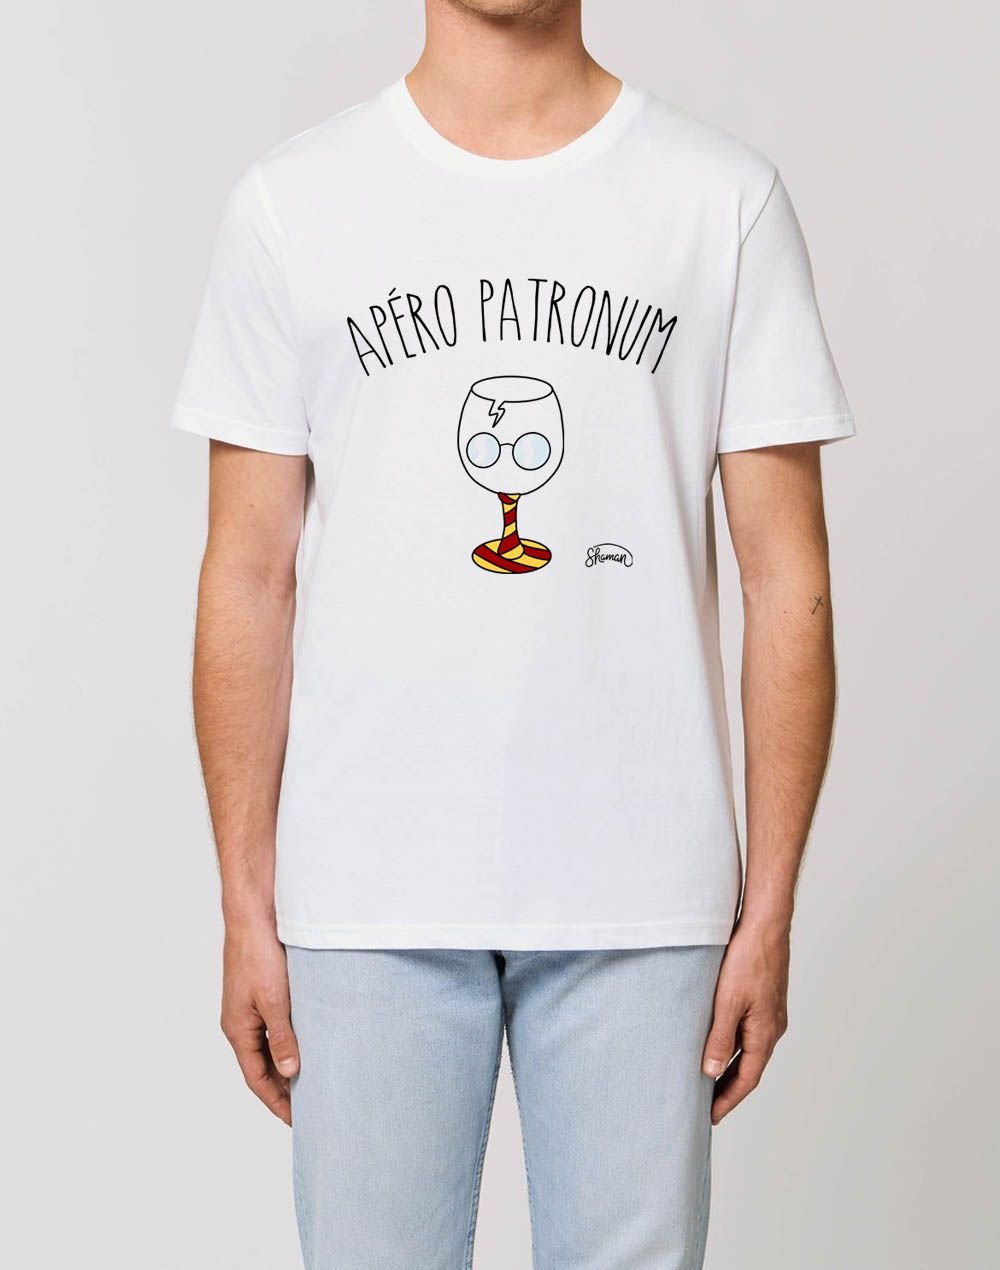 Tee-shirt "Apero Patronum"